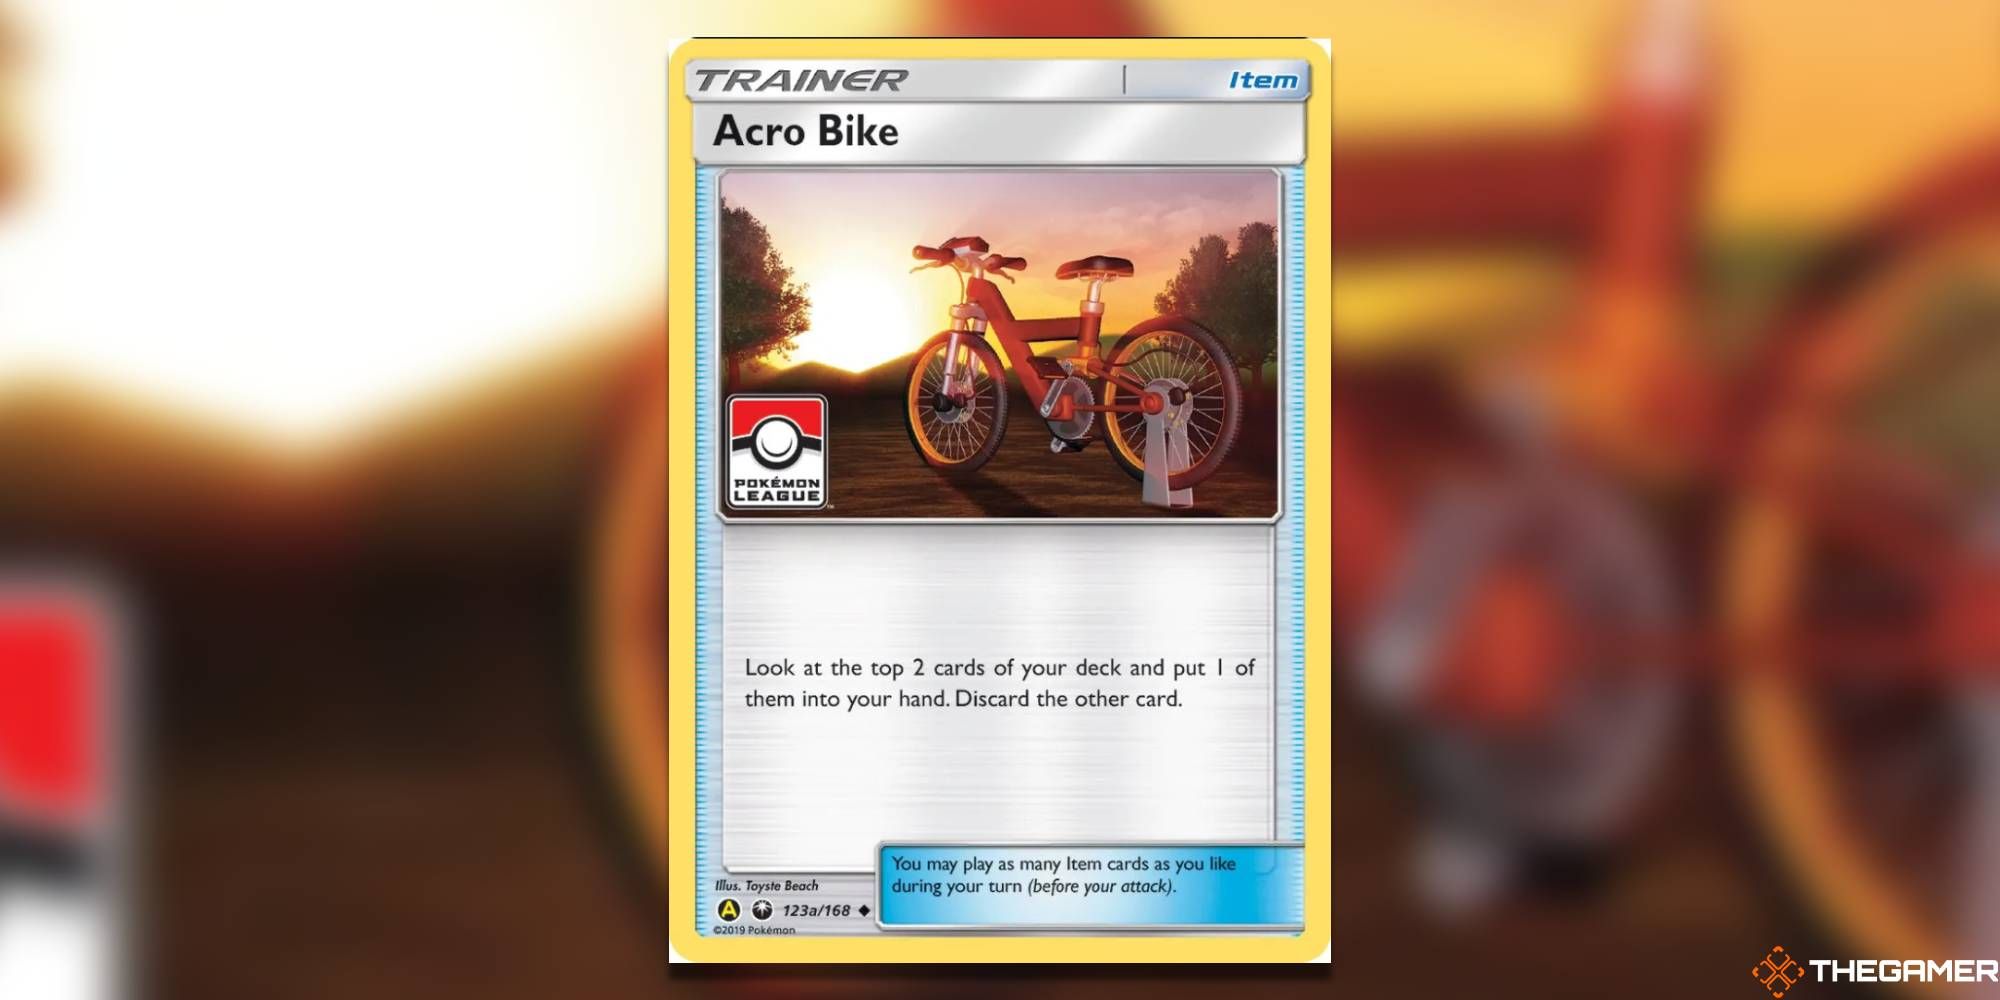 Tarjeta promocional de bicicleta Acro de JCC Pokémon